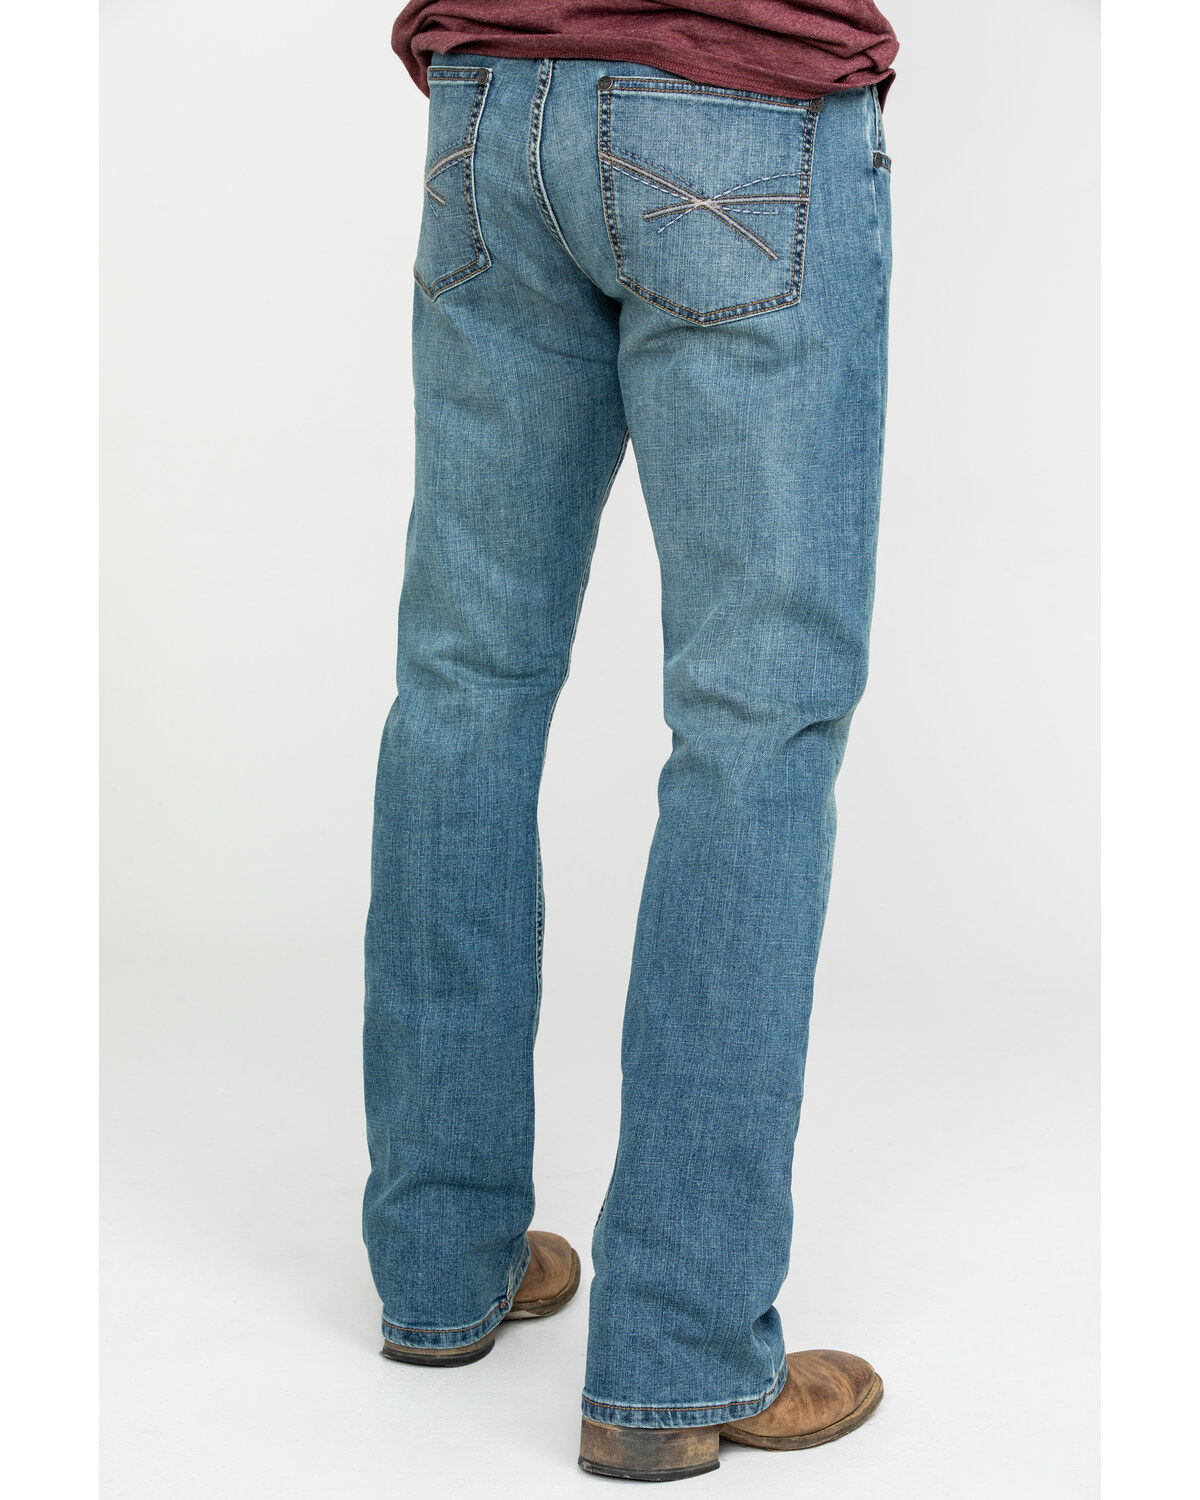 wrangler 20x jeans